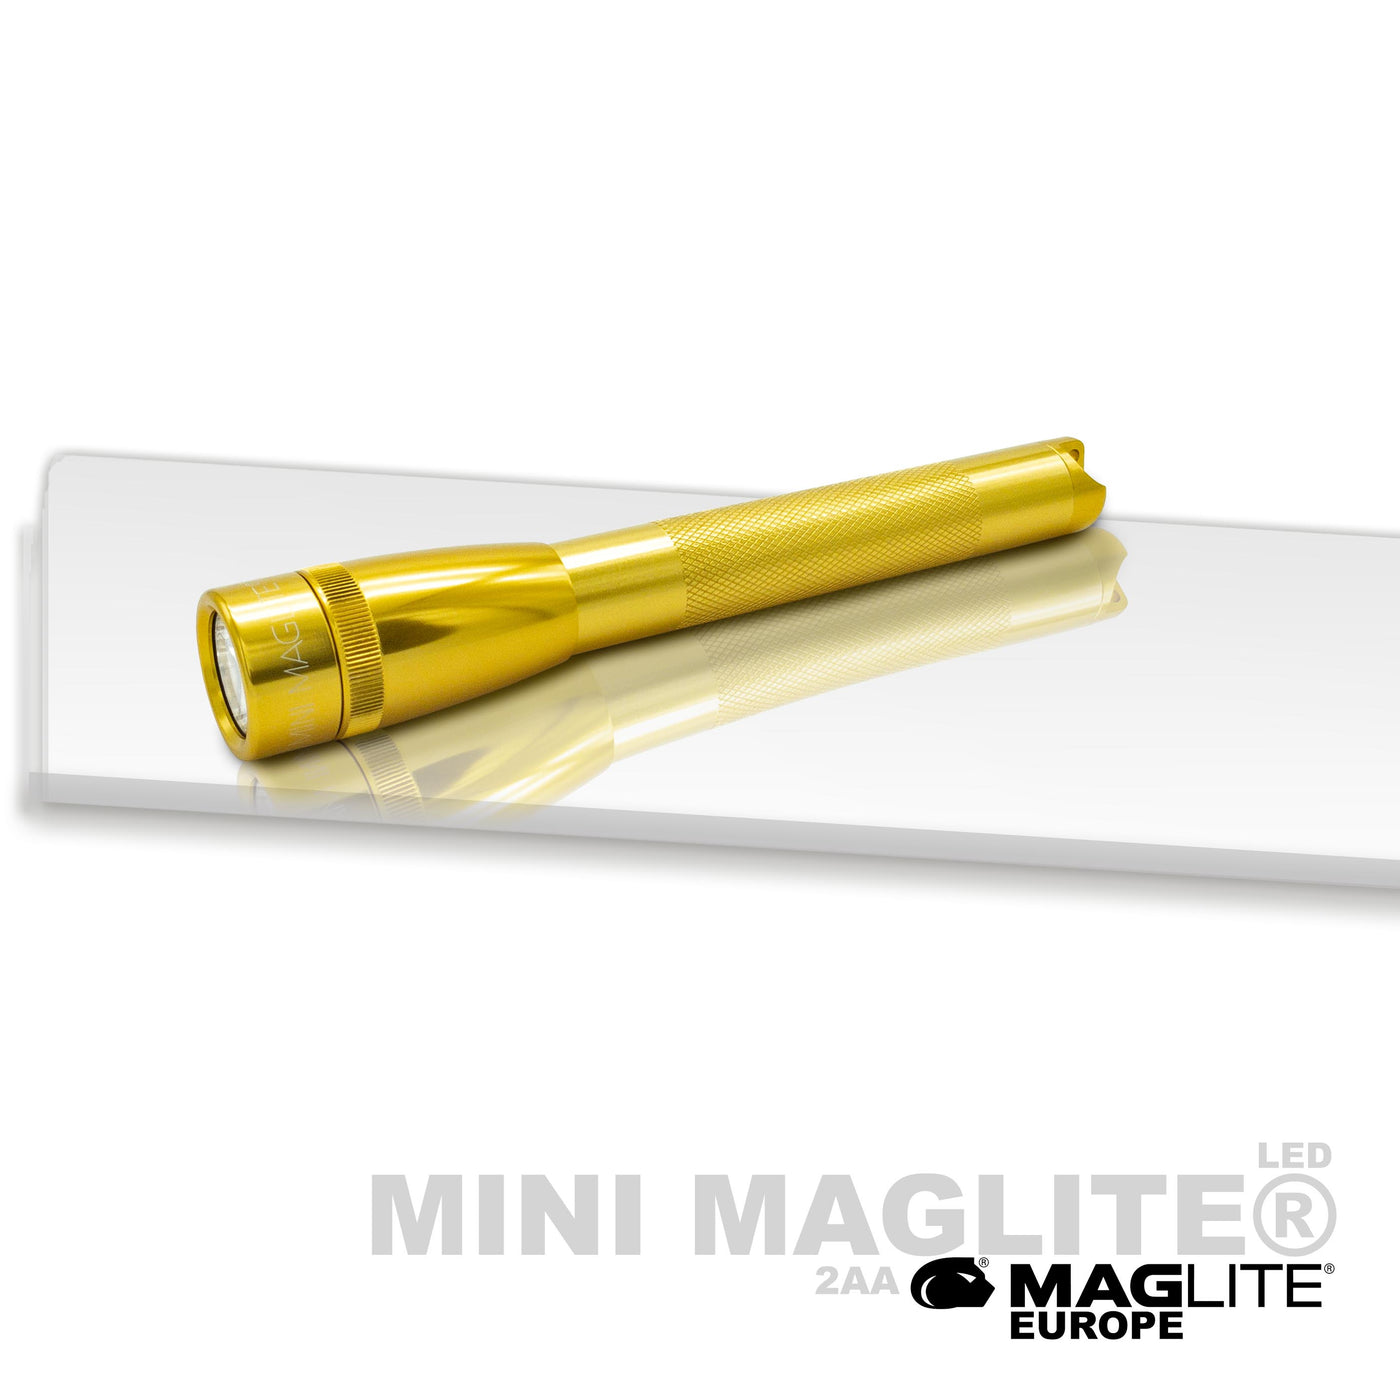 Mini Maglite® LED AA